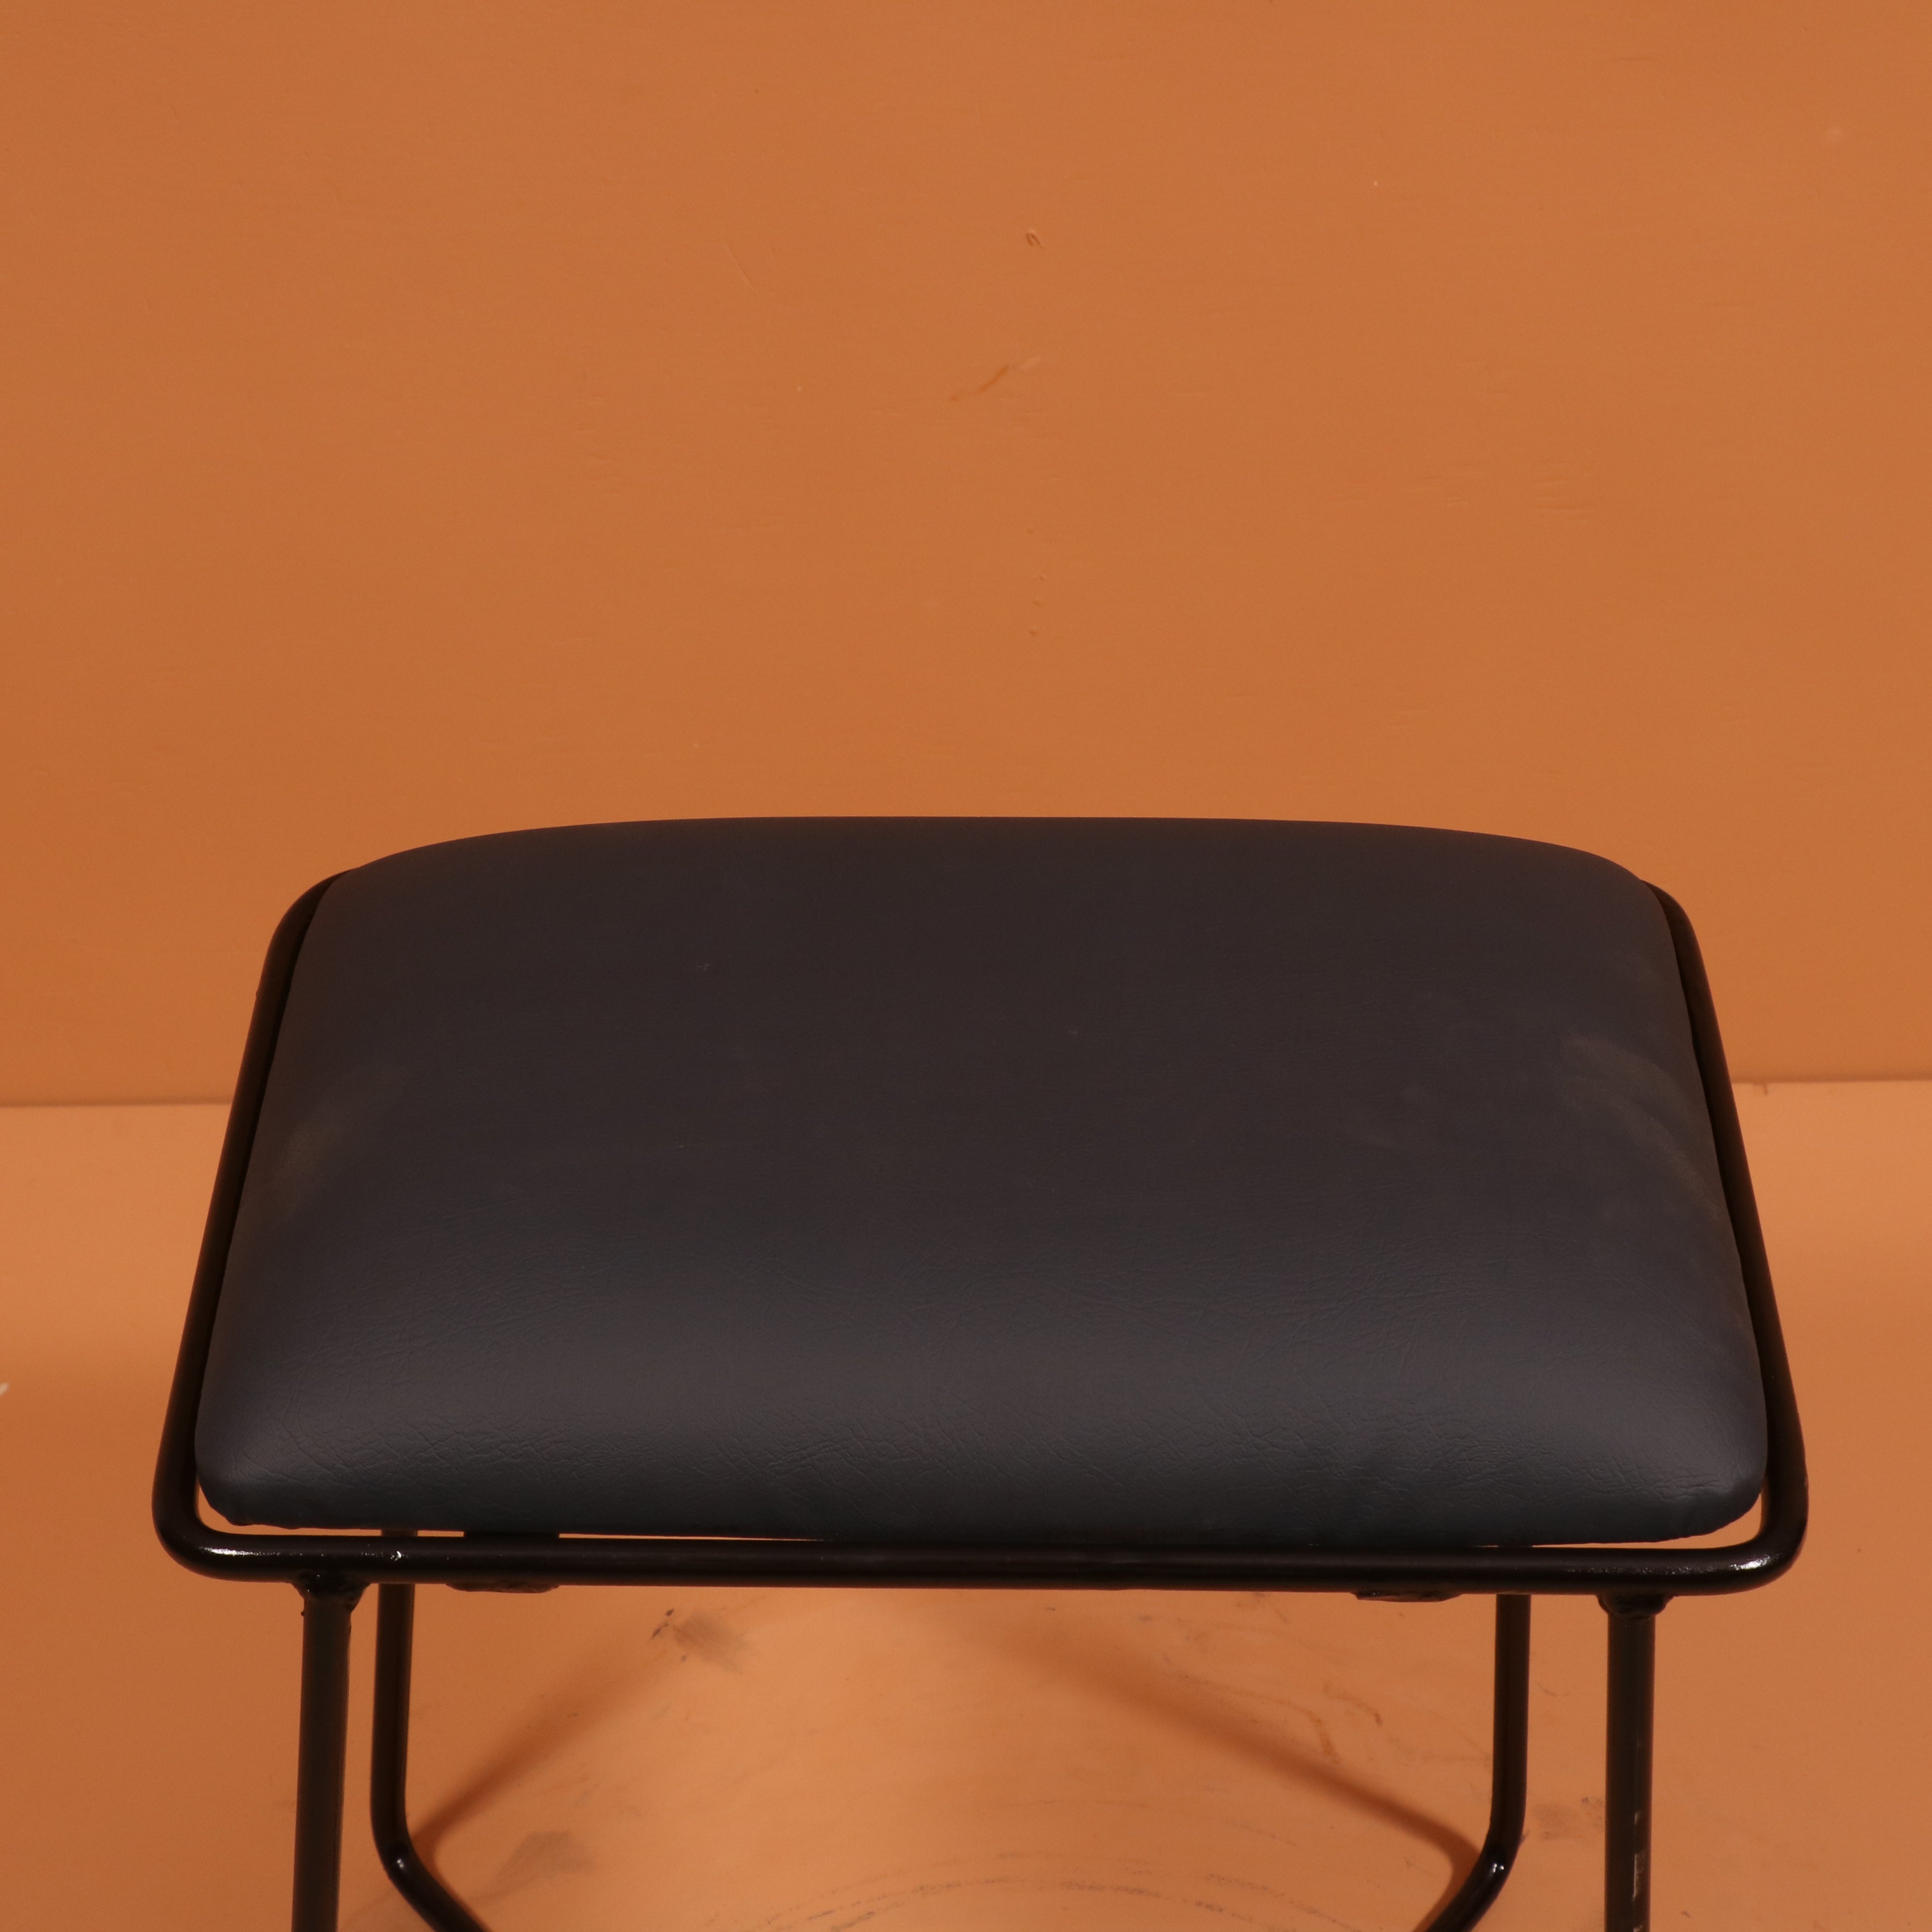 Outward Facing Rectangular Seat (Small (17 x 13 x 20 Inch)) Bench